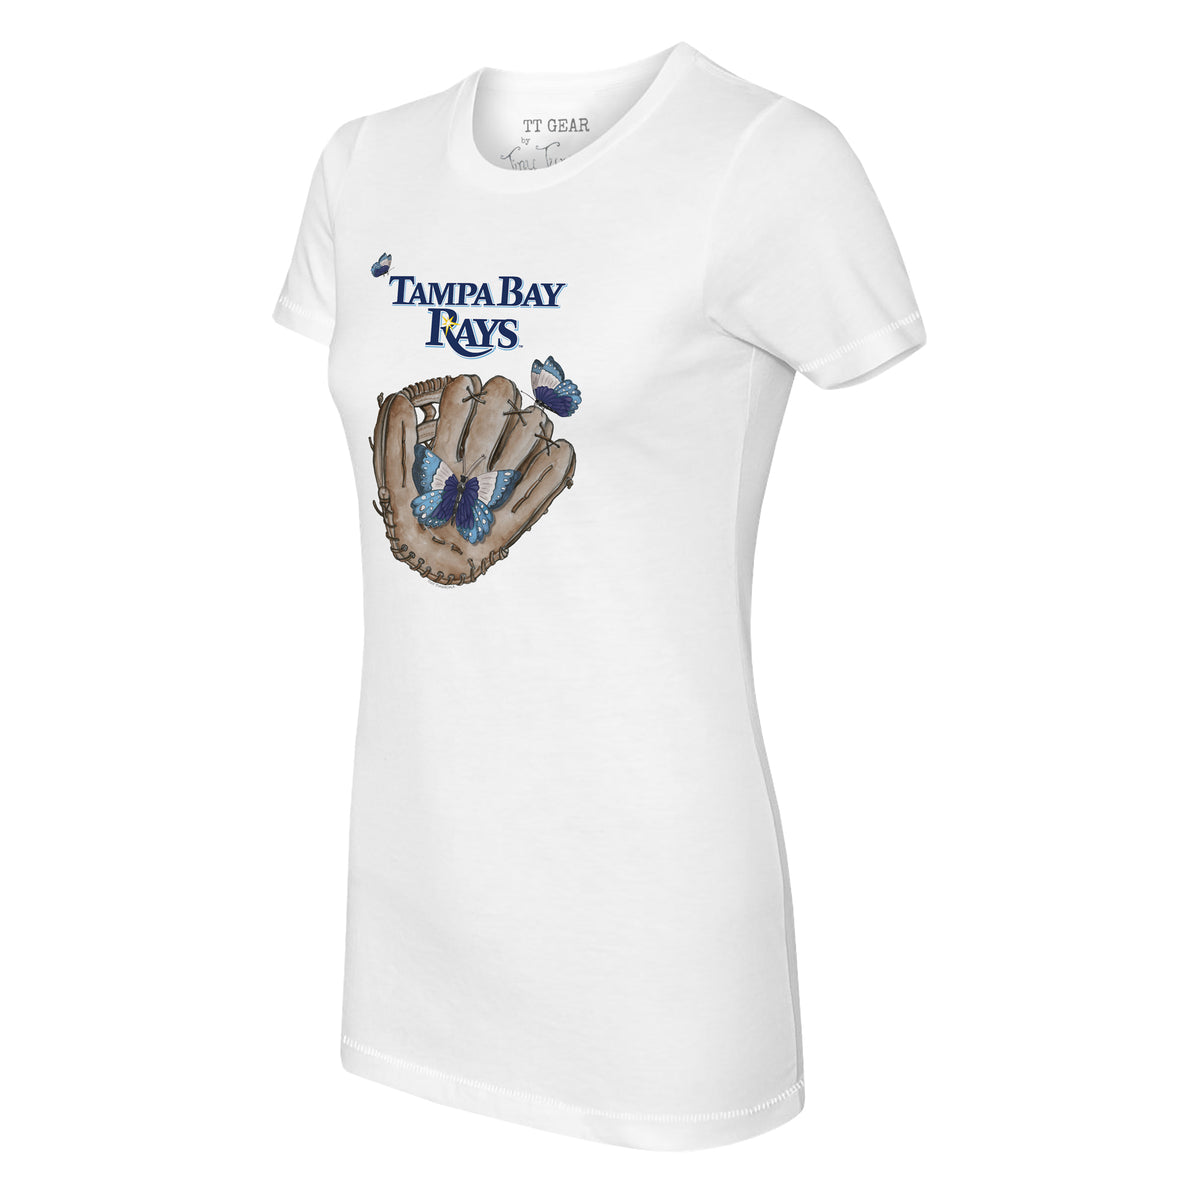 Tampa Bay Rays Butterfly Glove Tee Shirt